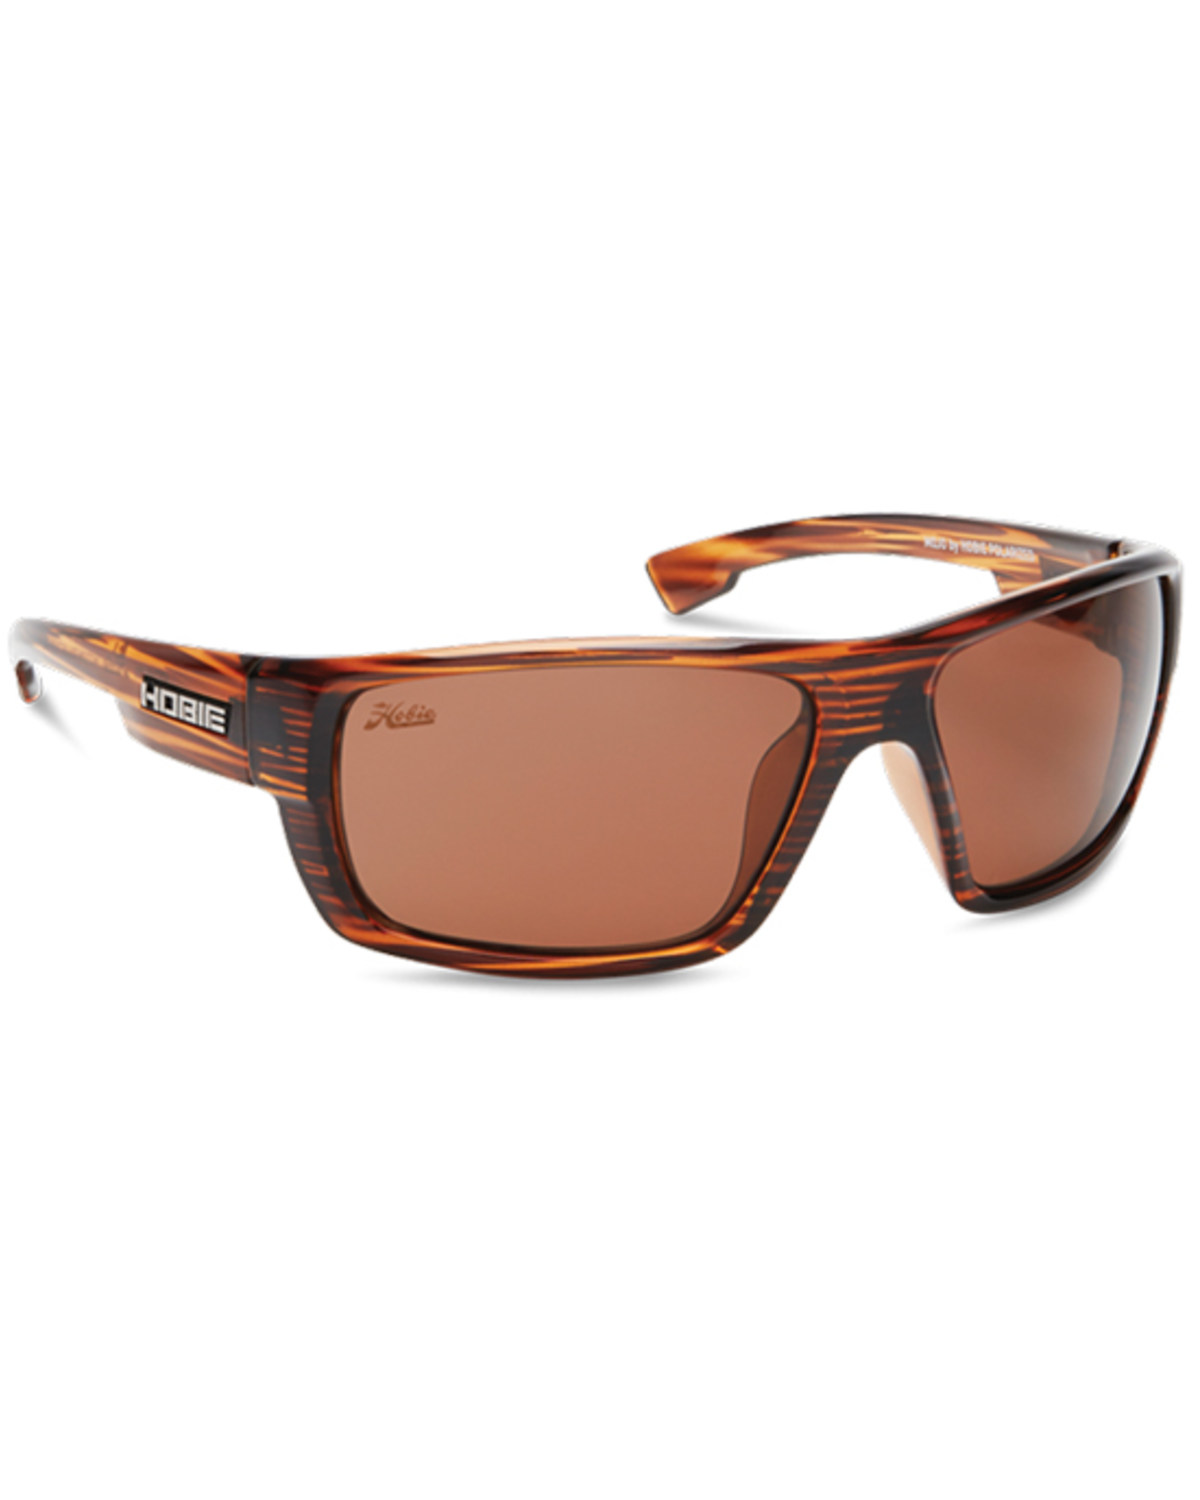 Hobie Mojo Float Shiny Brown & Copper Wood Grain Polarized Sunglasses